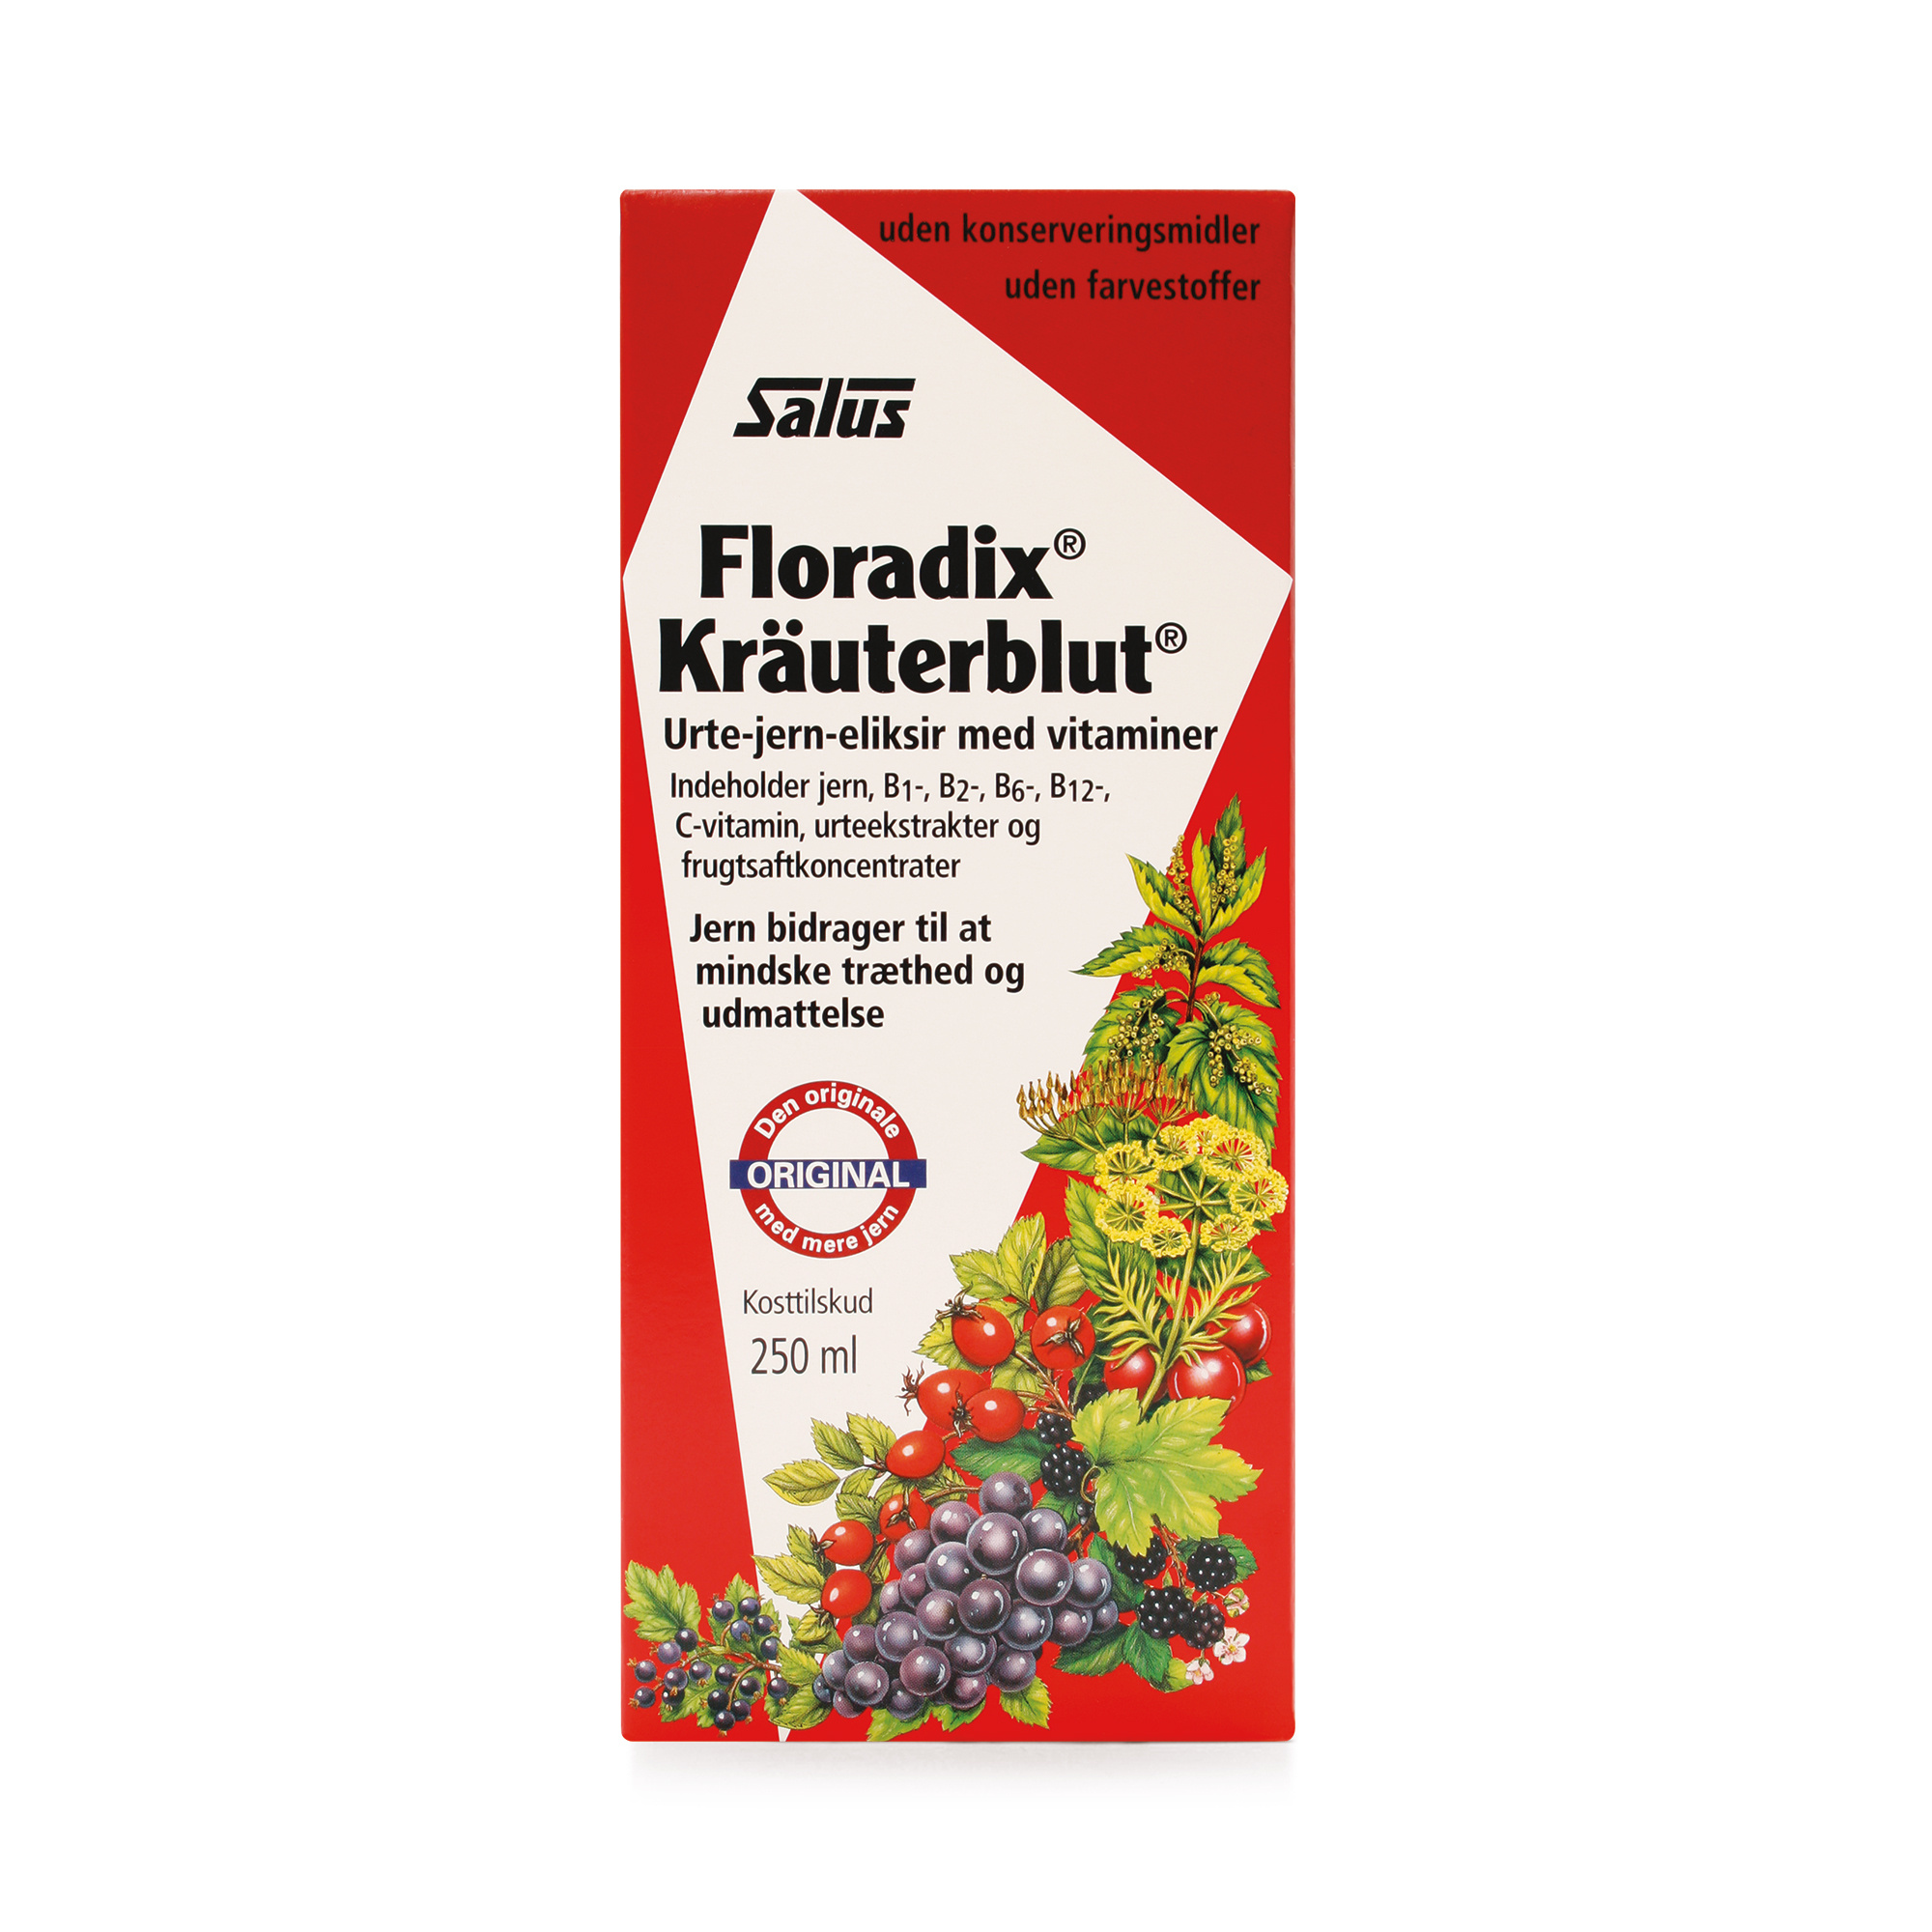 Billede af Salus Floradix Kräuterblut - 250 ml. hos Duft og Natur